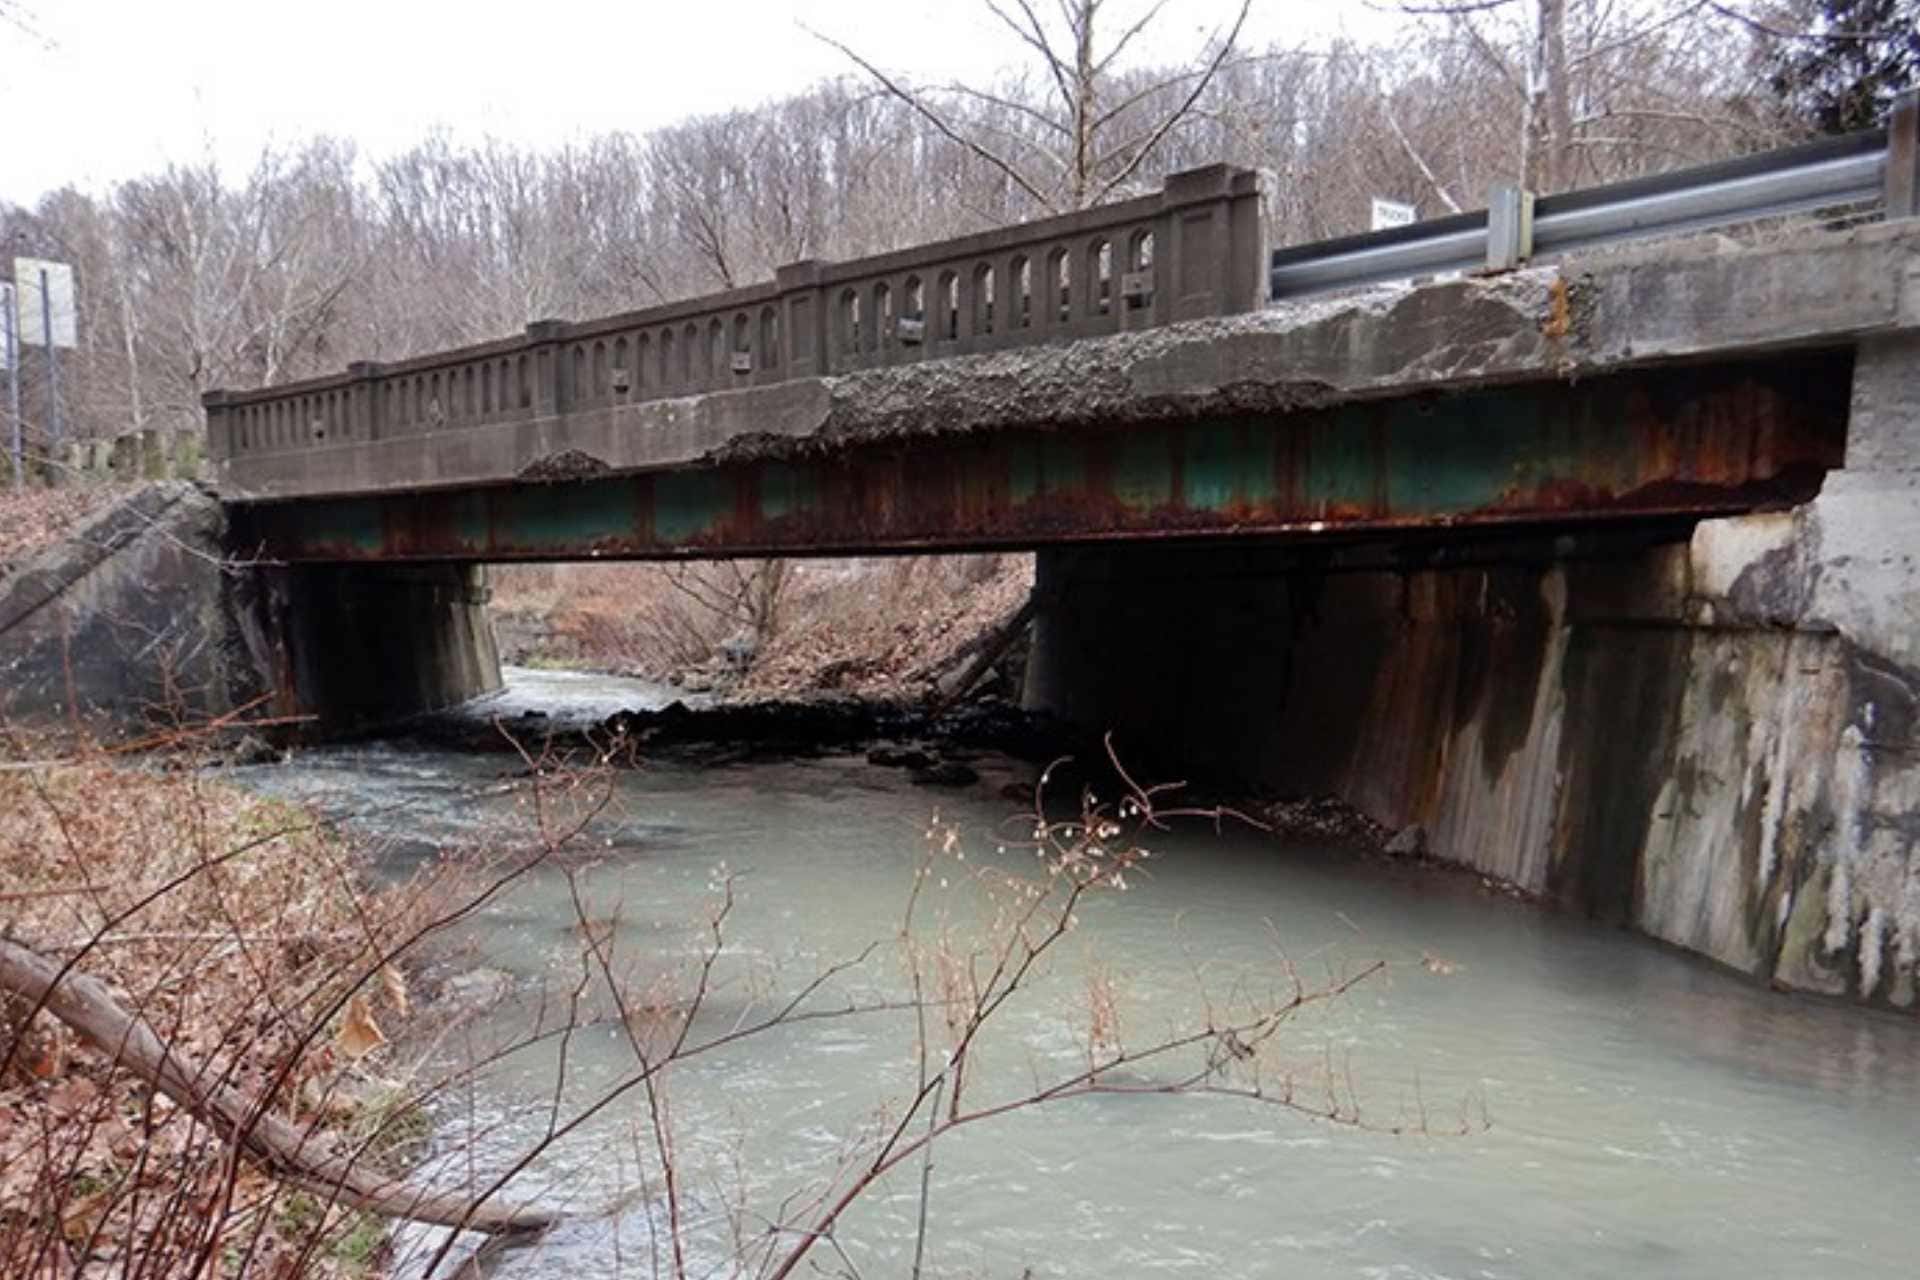 An aging Ohio County bridge